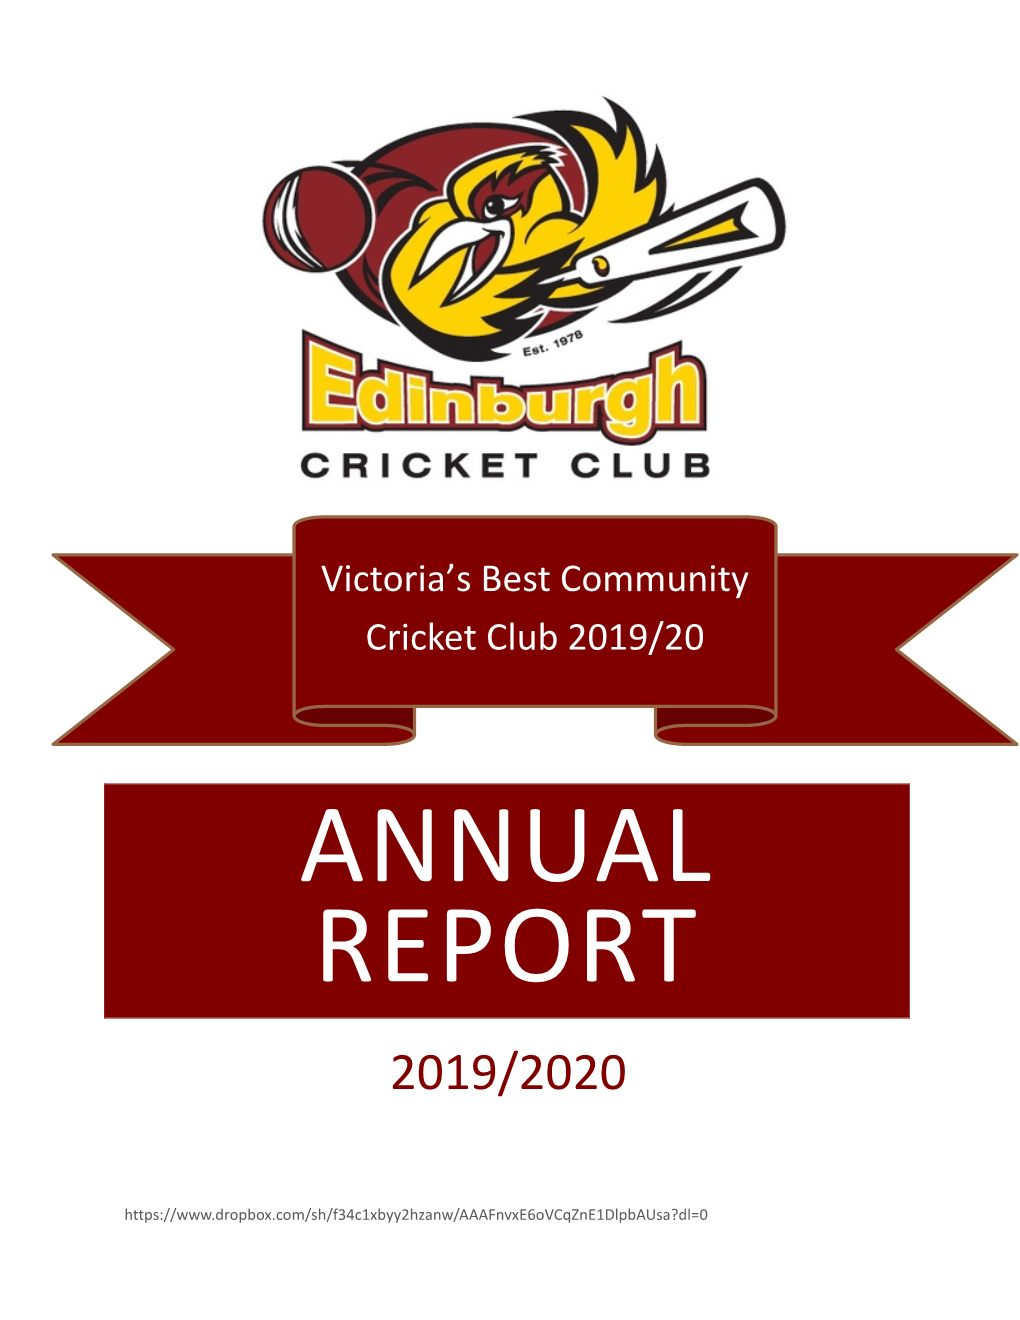 Victoria's Best Community Cricket Club 2019/20